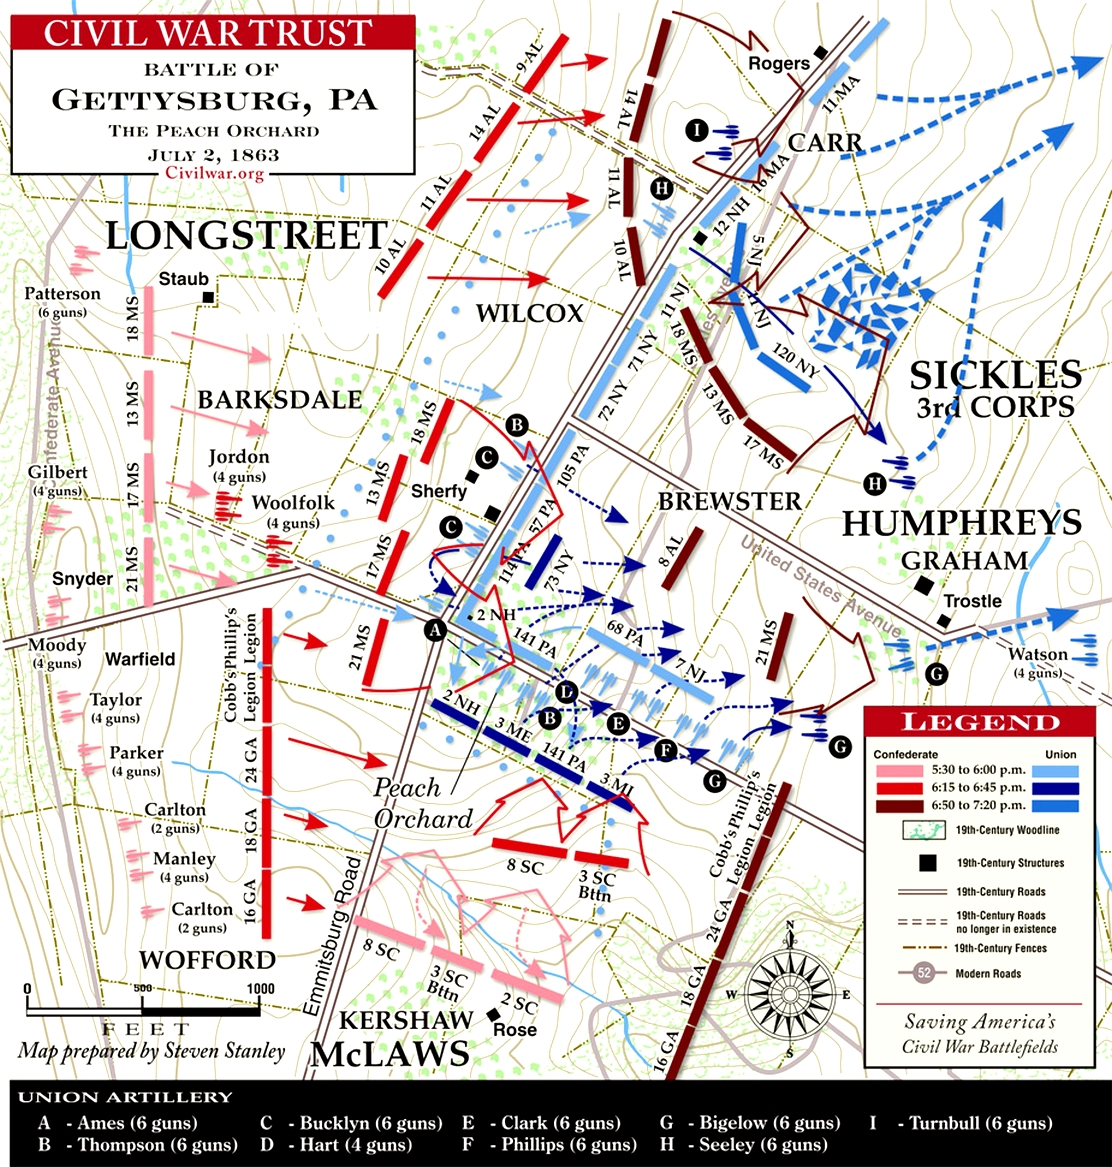 The Peach Orchard, Battle of Gettysburg.jpg